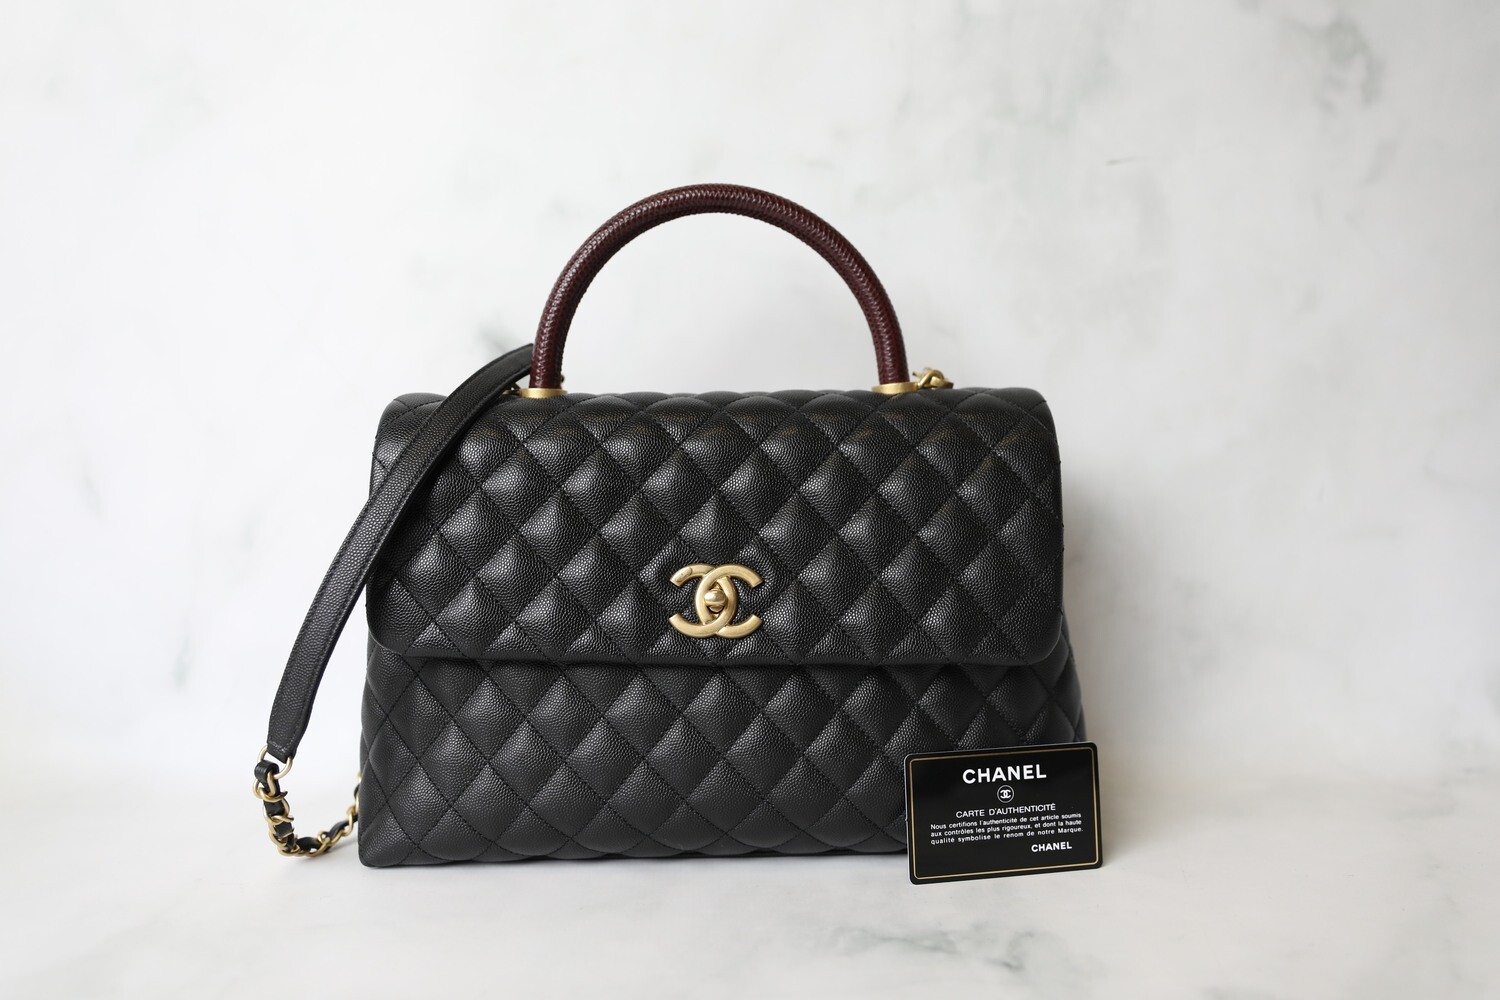 Chanel Black/Burgundy Caviar Leather Medium Coco Top Handle Bag Chanel